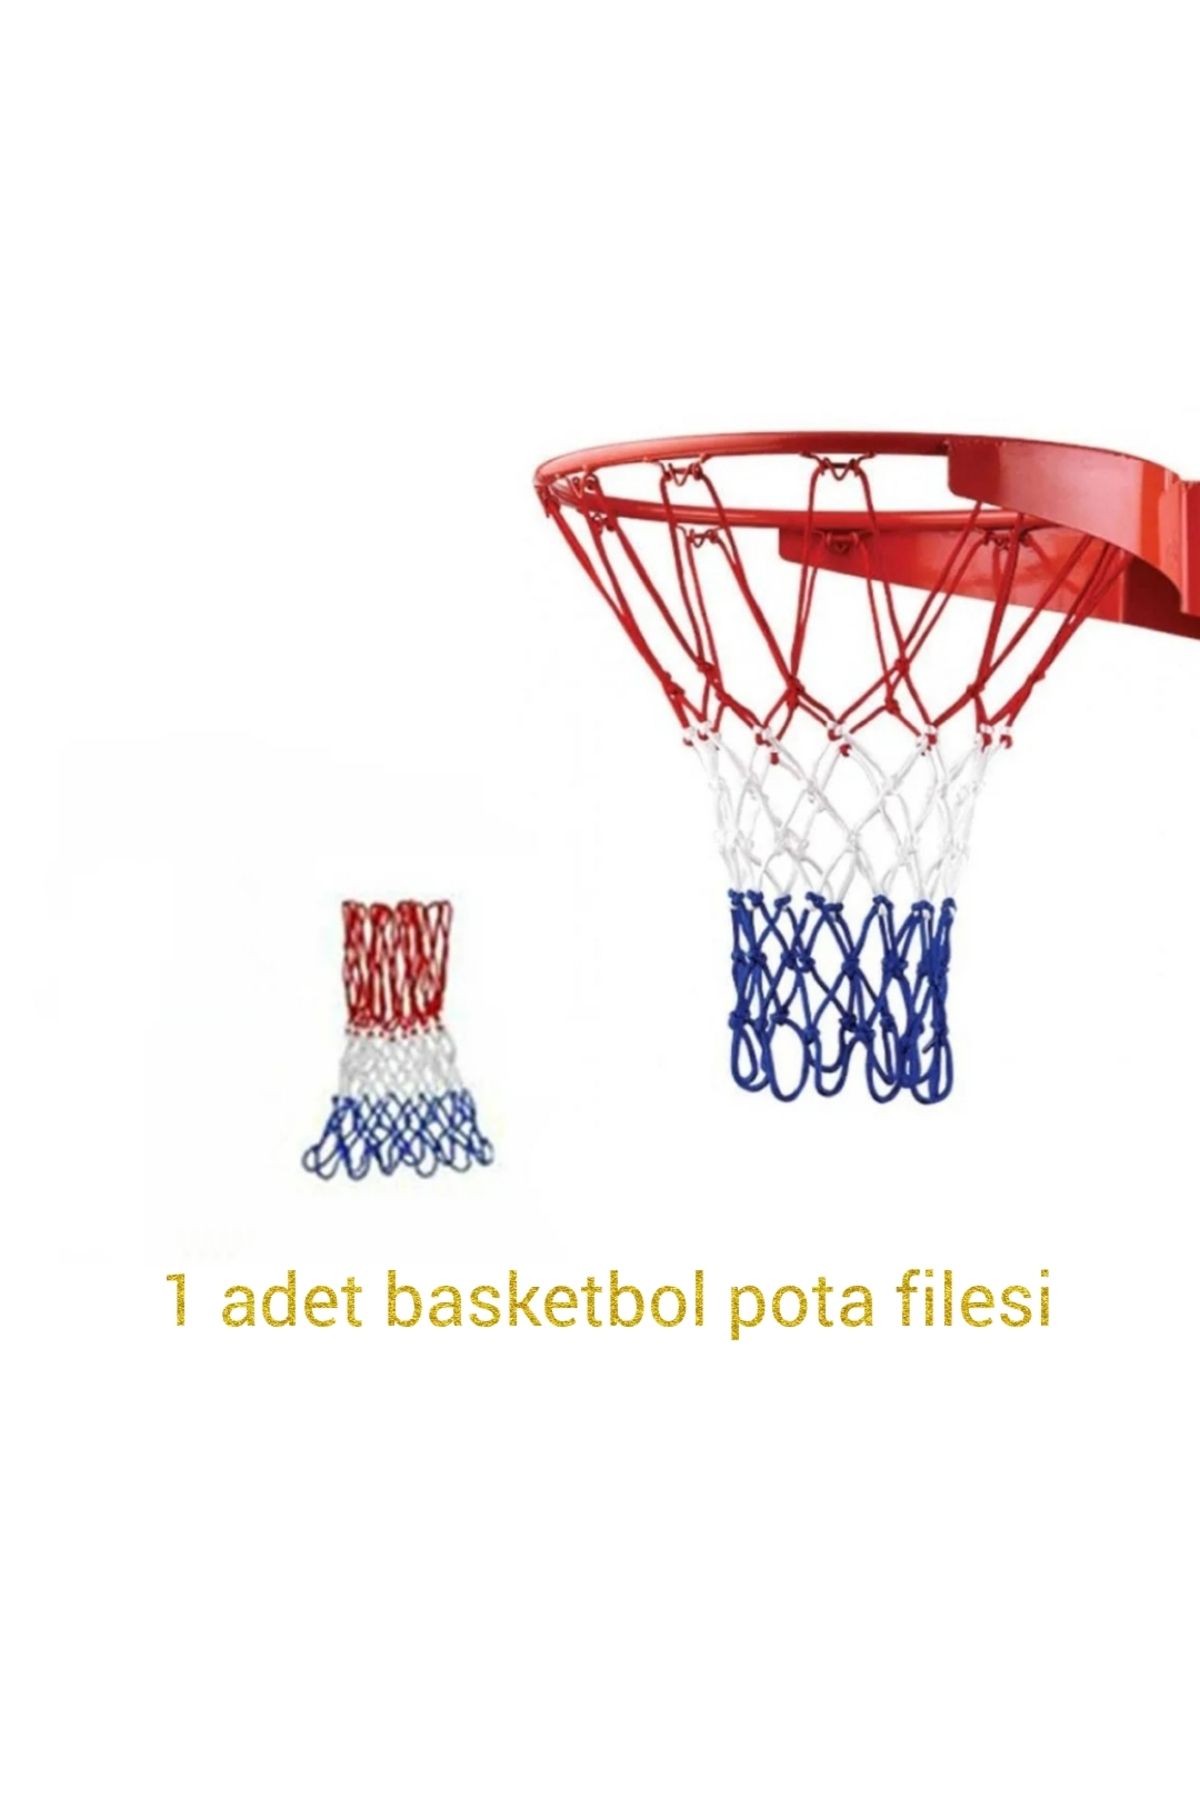 HNsport Standart Basketbol Pota Ağı / Filesi 1 adet